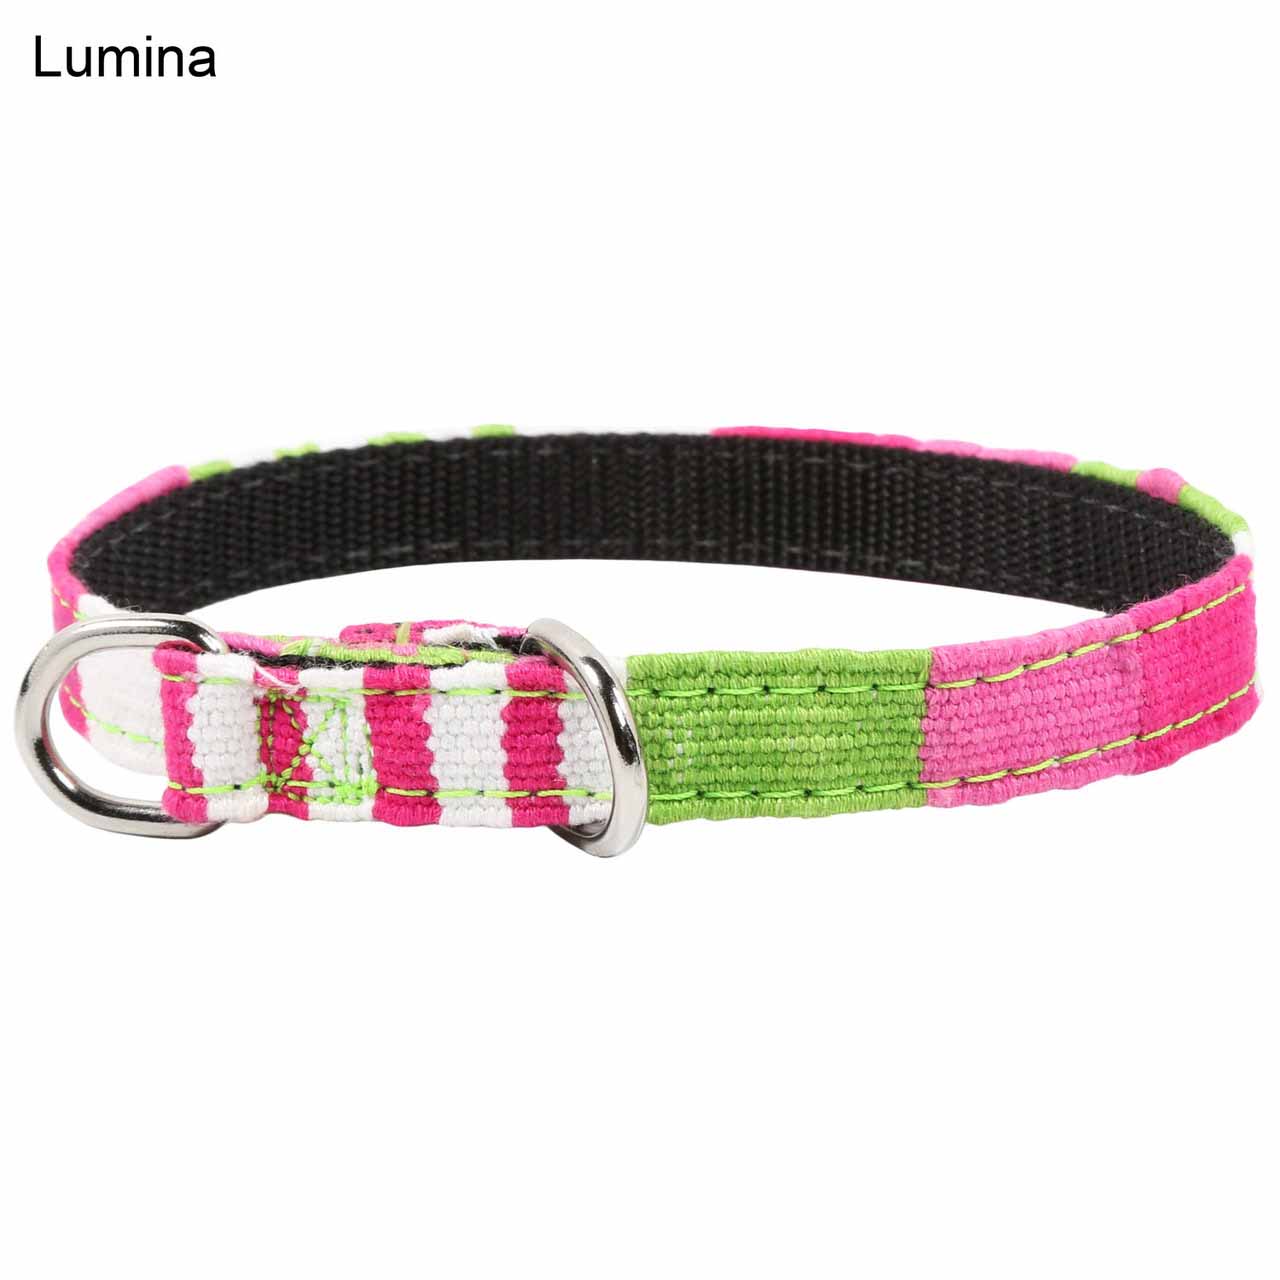 MAYA Small Slip Collar for Puppies & Small Dogs - Lumina